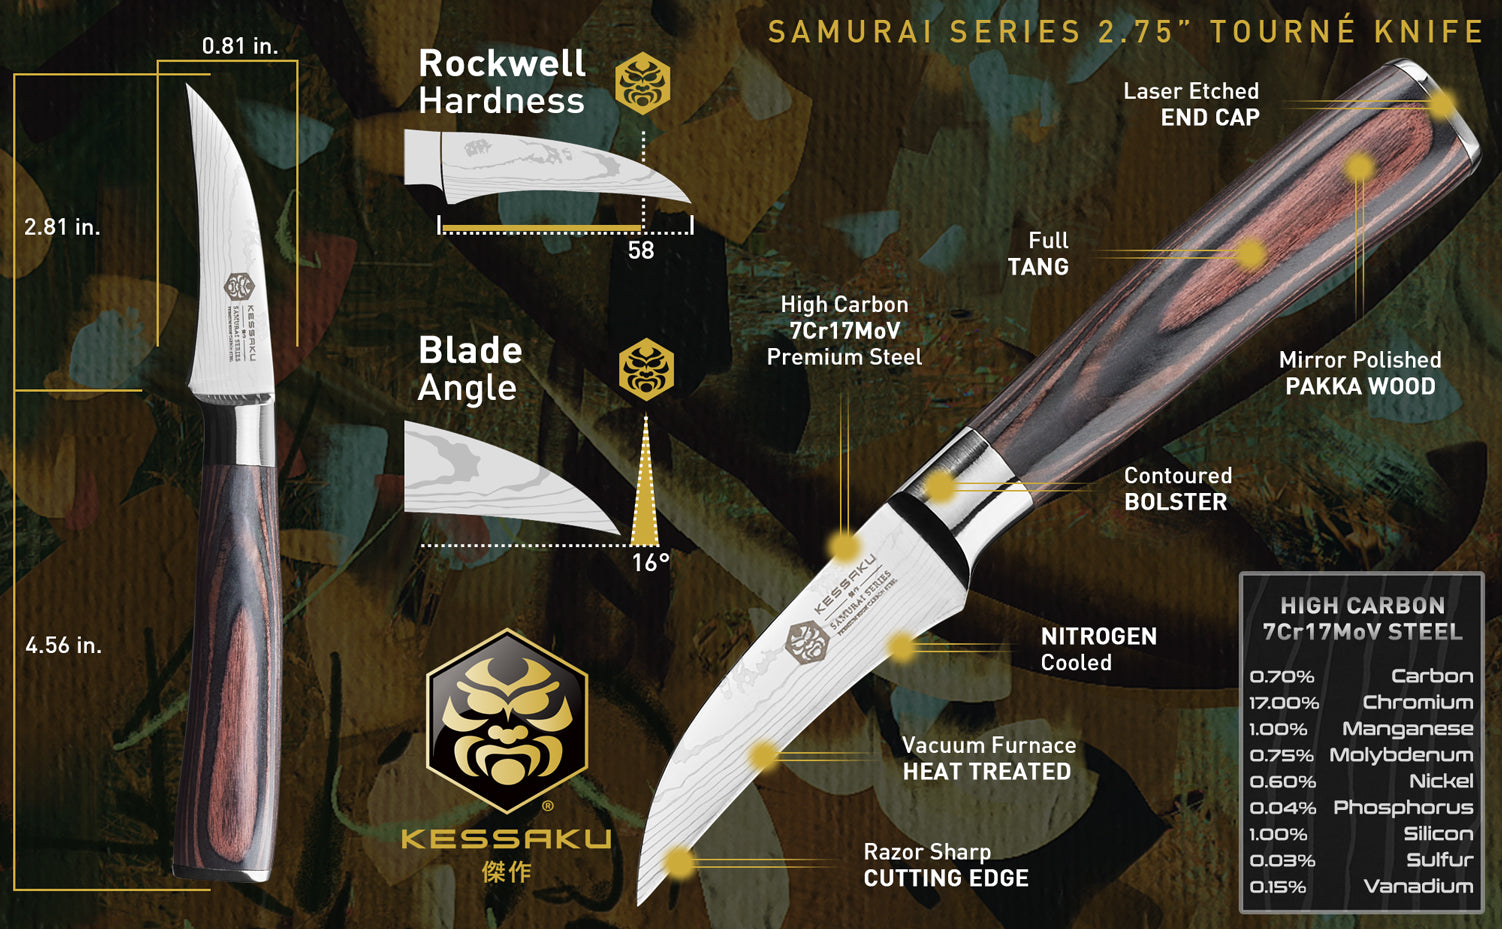 The Kessaku Samurai Series 2.75-Inch Bird's Beak Knife's features, dimensions, and steel composition